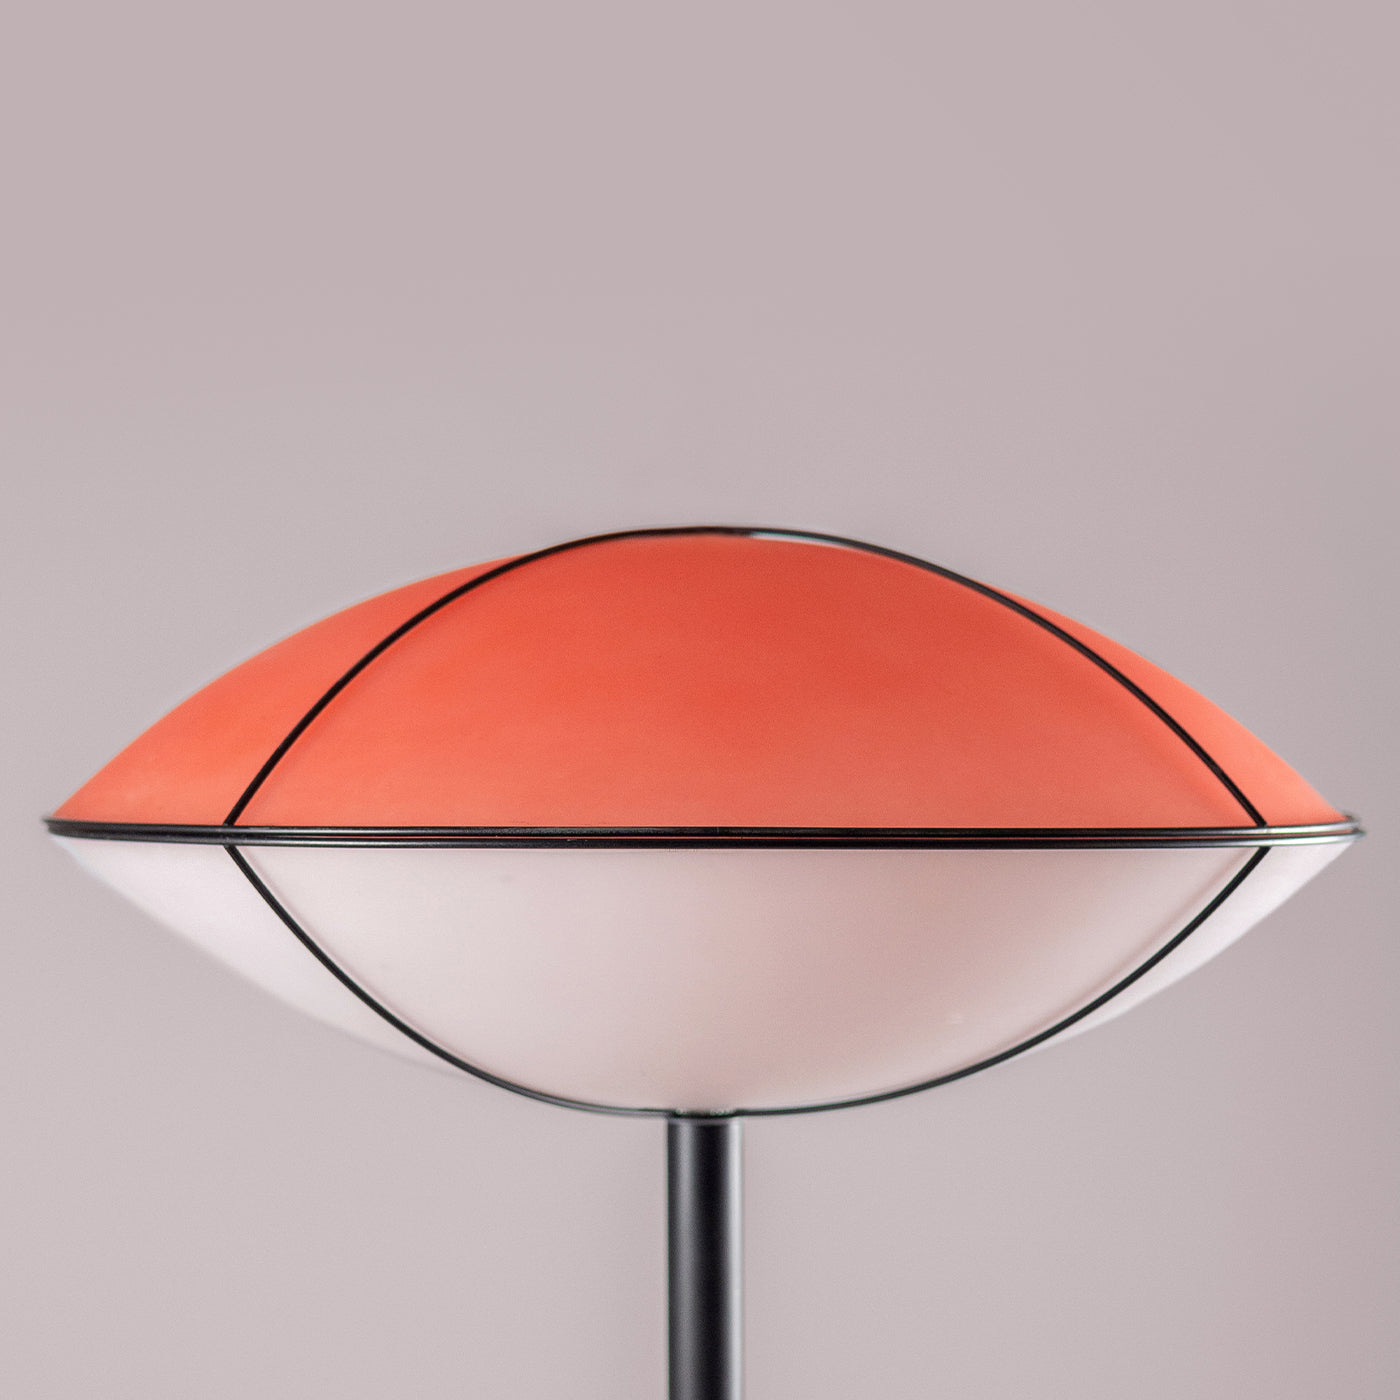 Dome Floor Lamp by Simone Fanciullacci - Alternative view 4